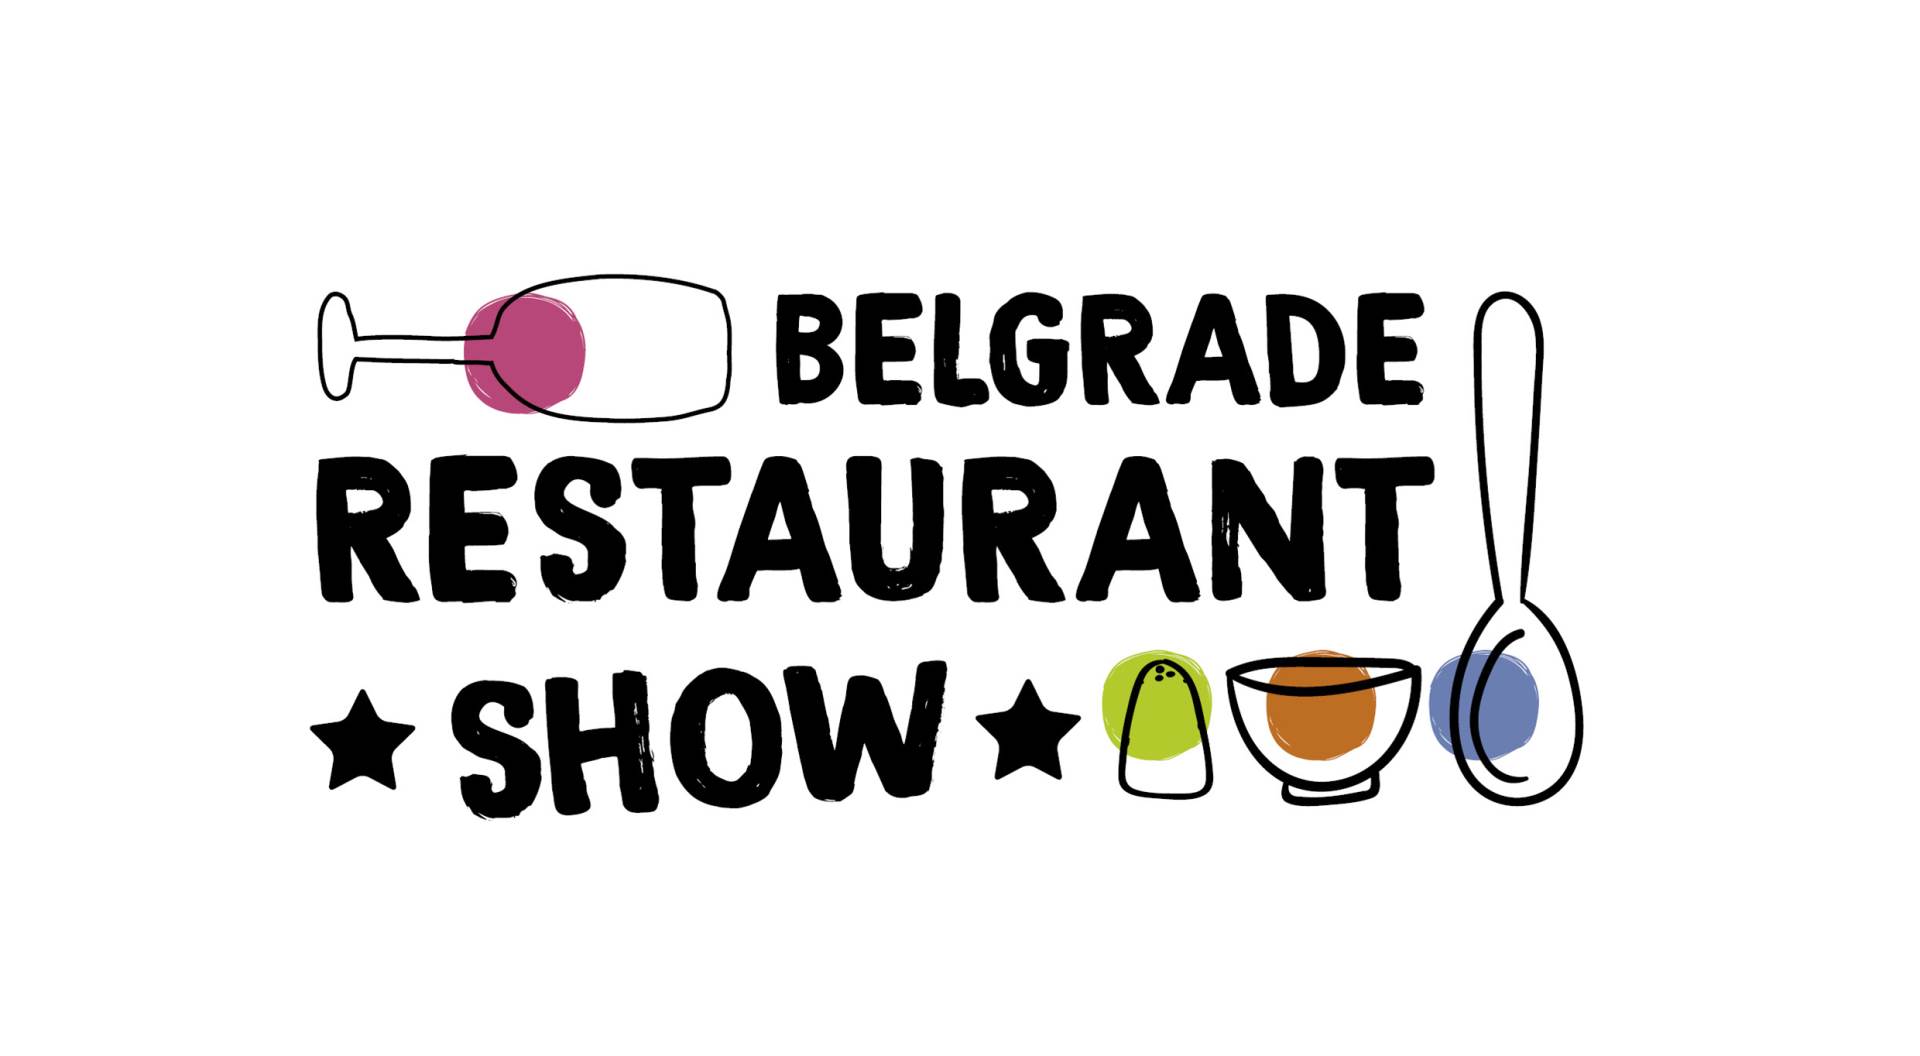  Belgrade Restaurant Show 